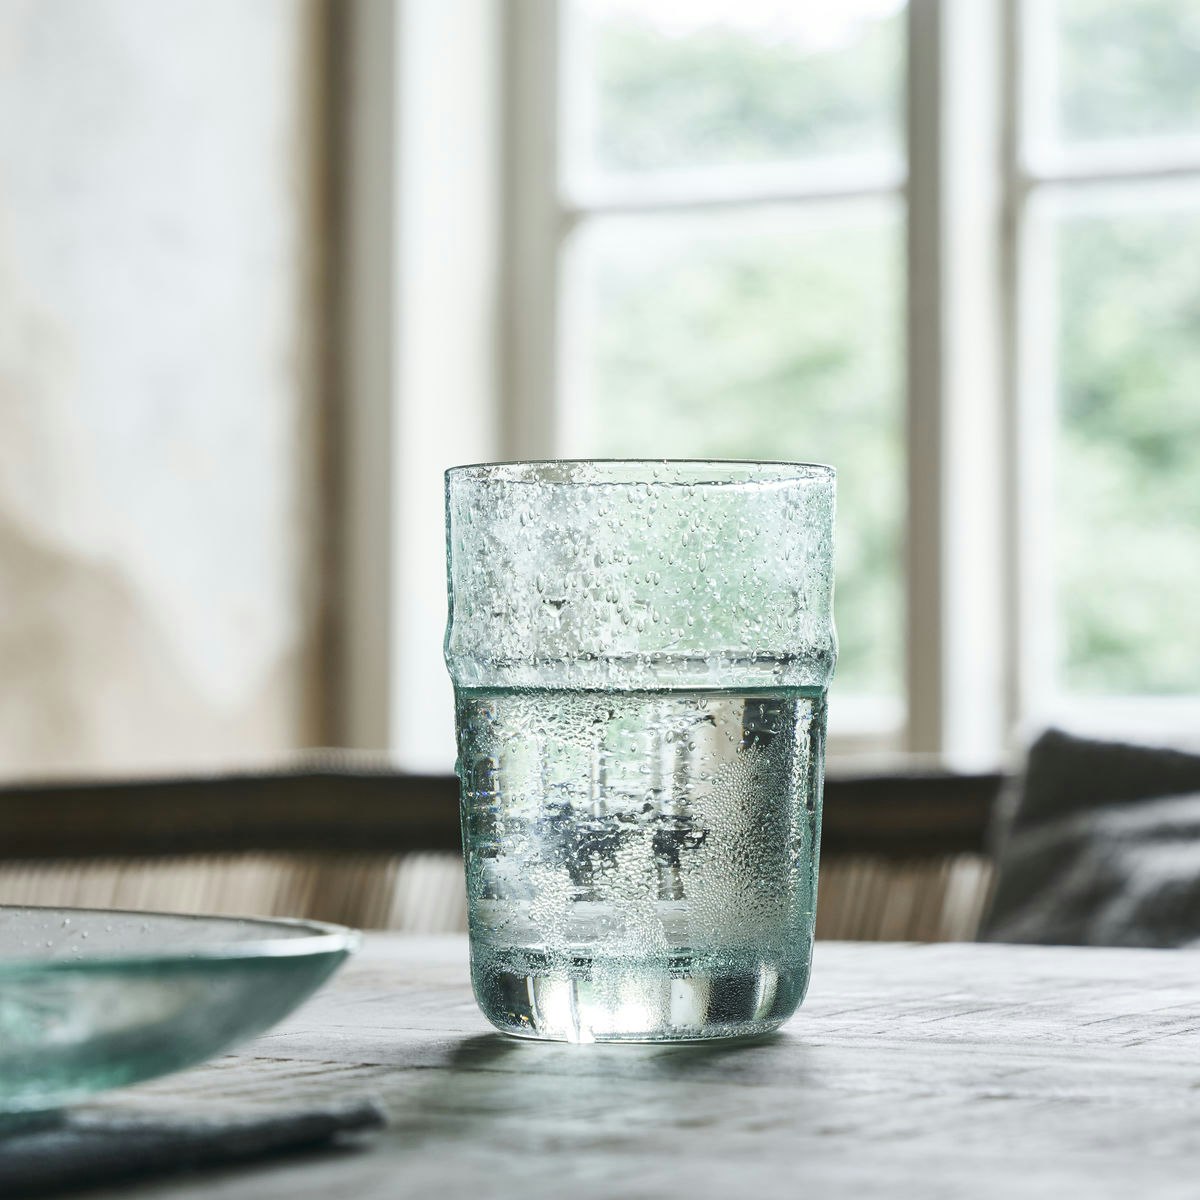 https://royaldesign.com/image/2/house-doctor-rain-drinking-glass-2-pack-16?w=800&quality=80